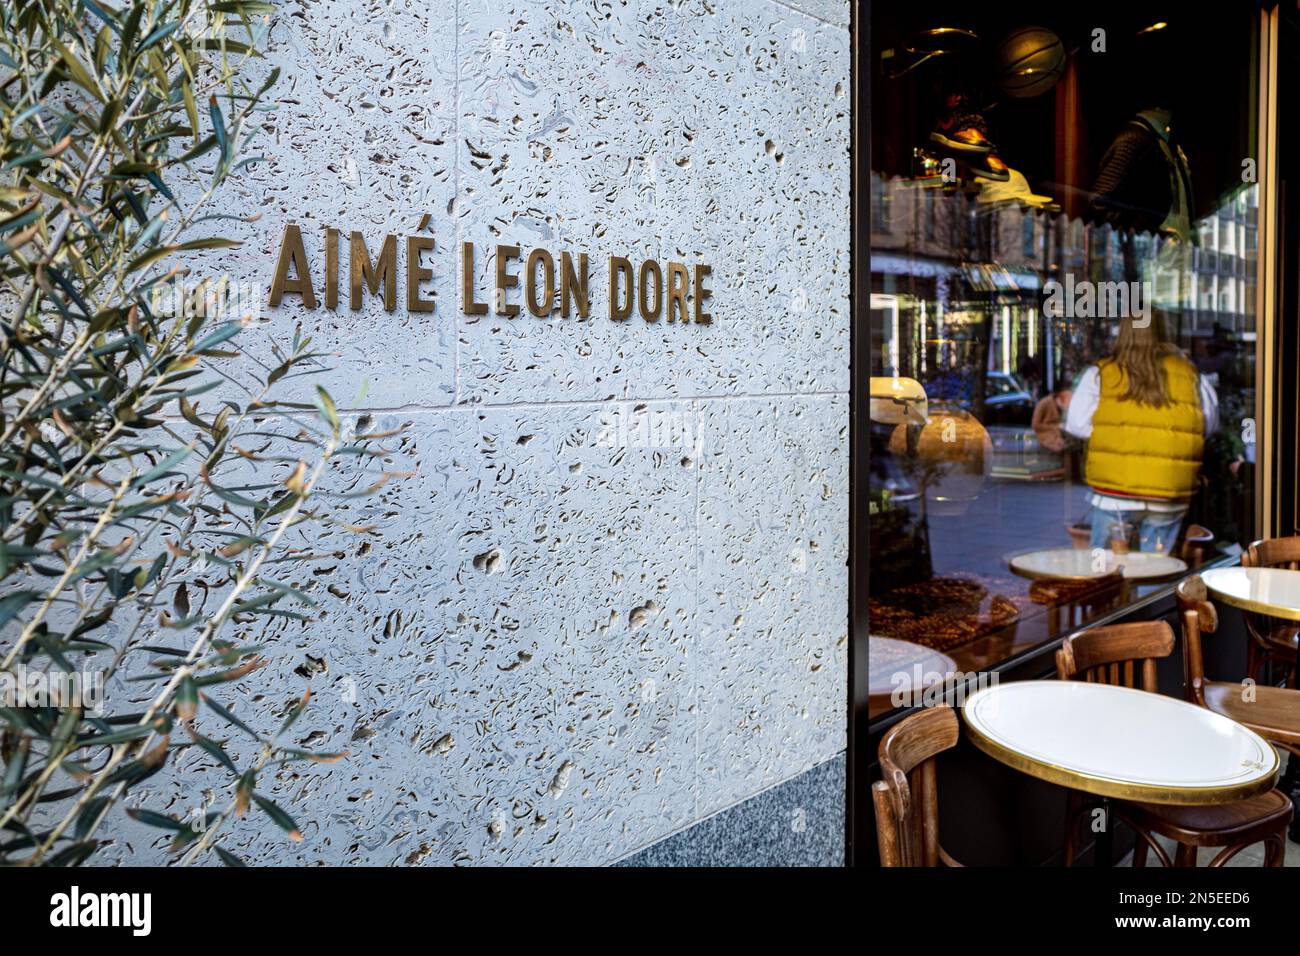 In pictures: Aimé Leon Dore's London flagship